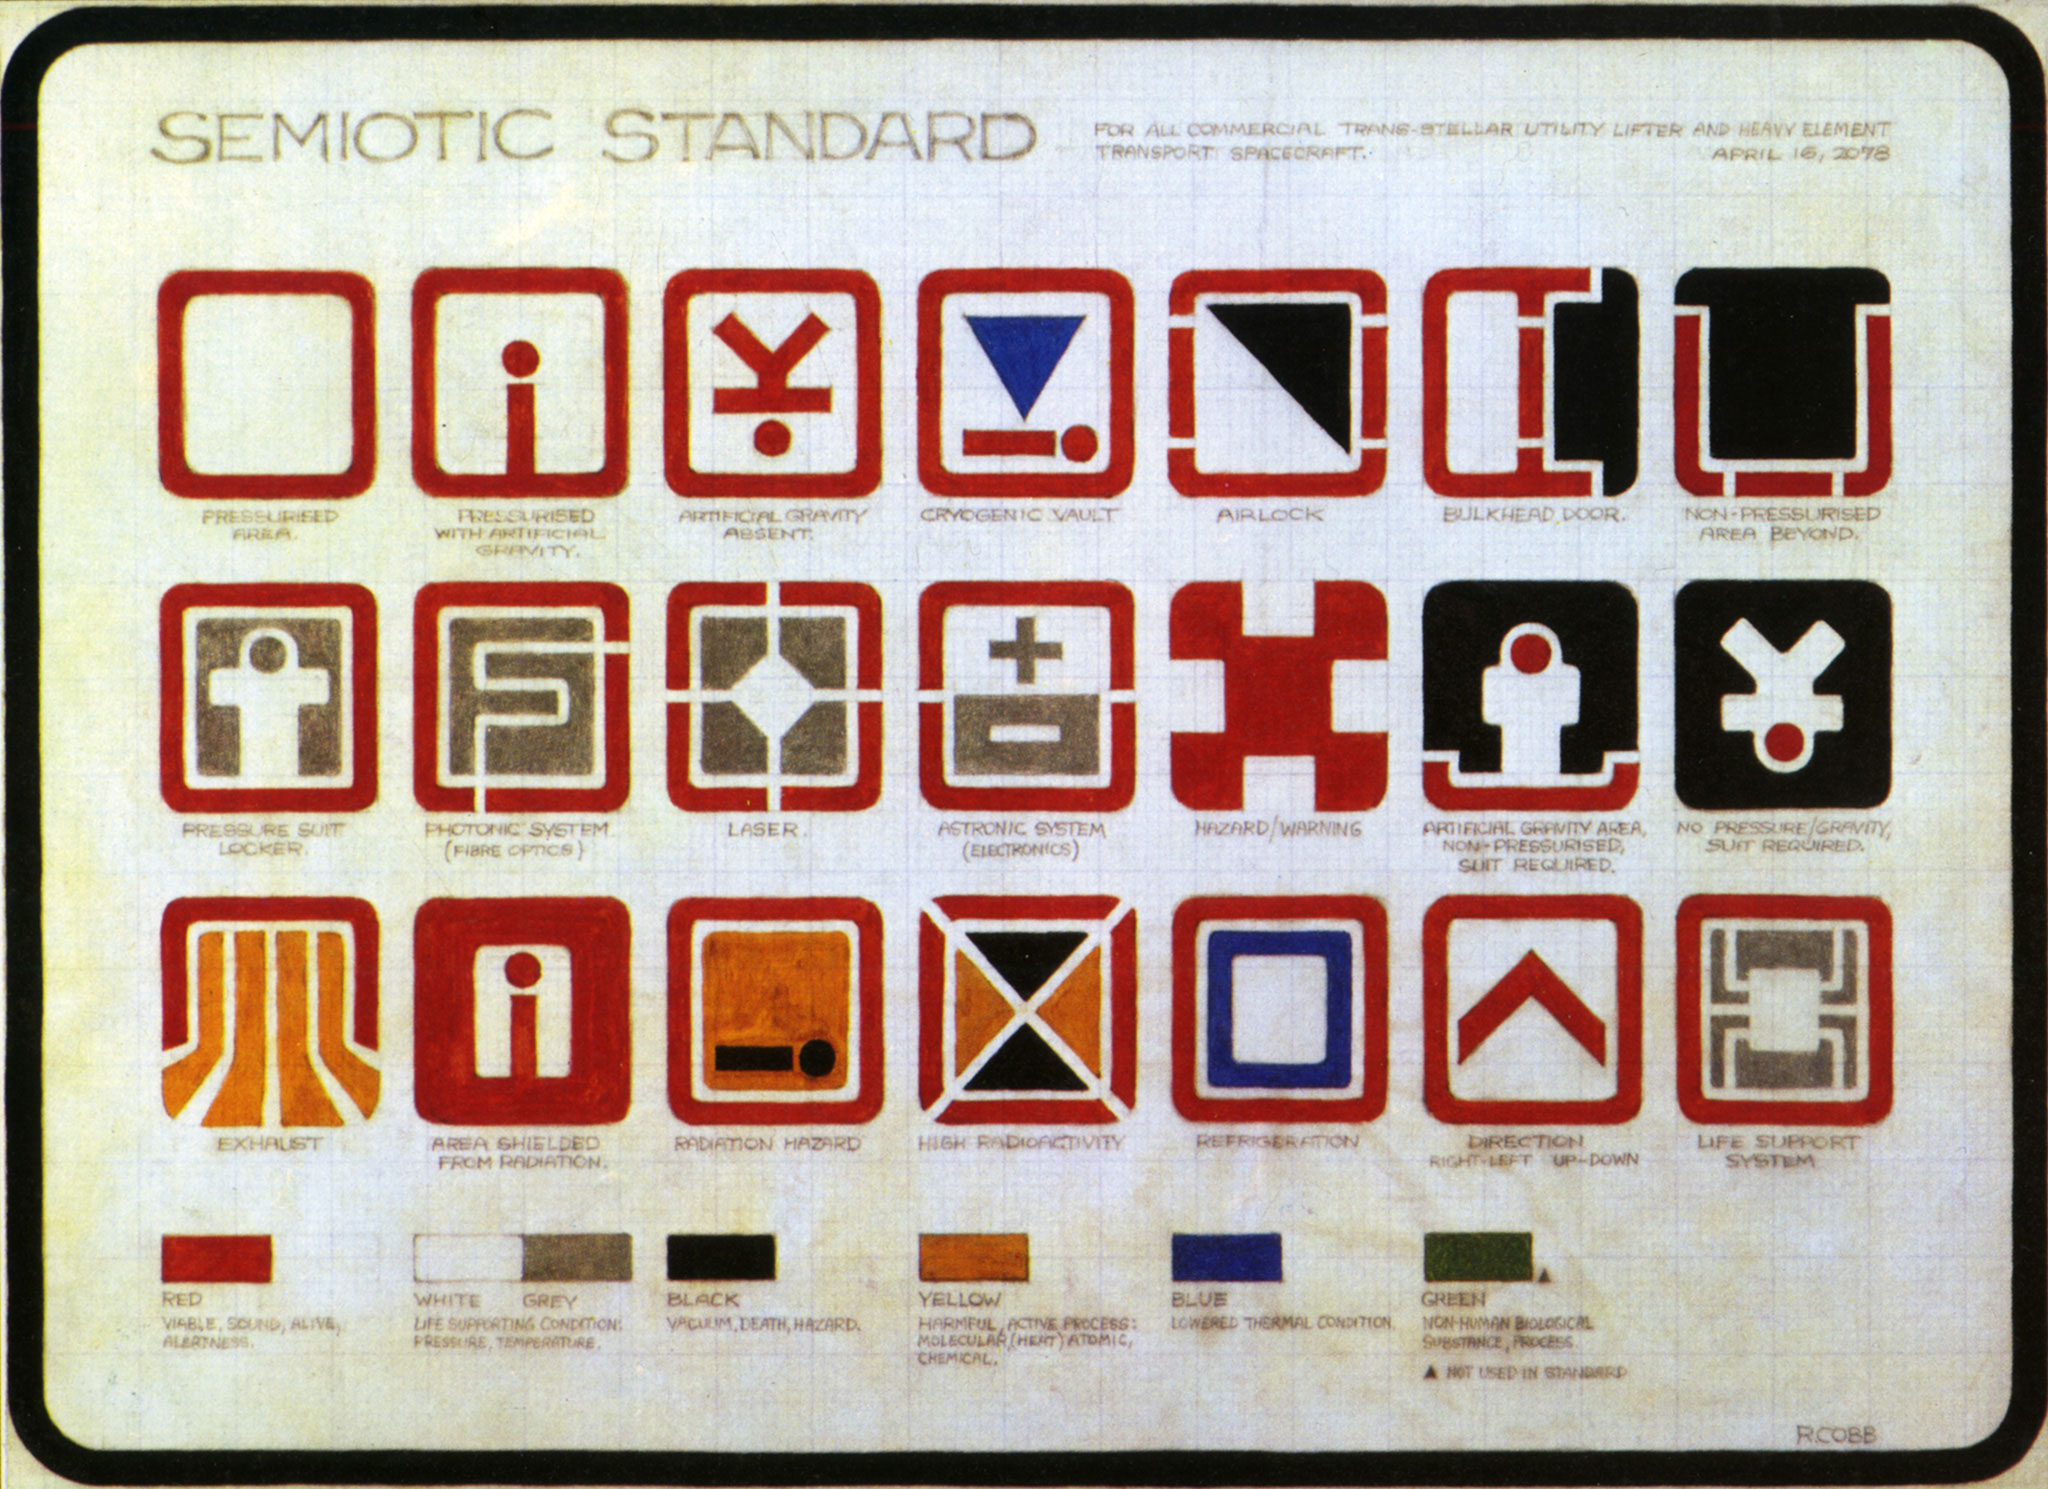 Semiotic standard icons